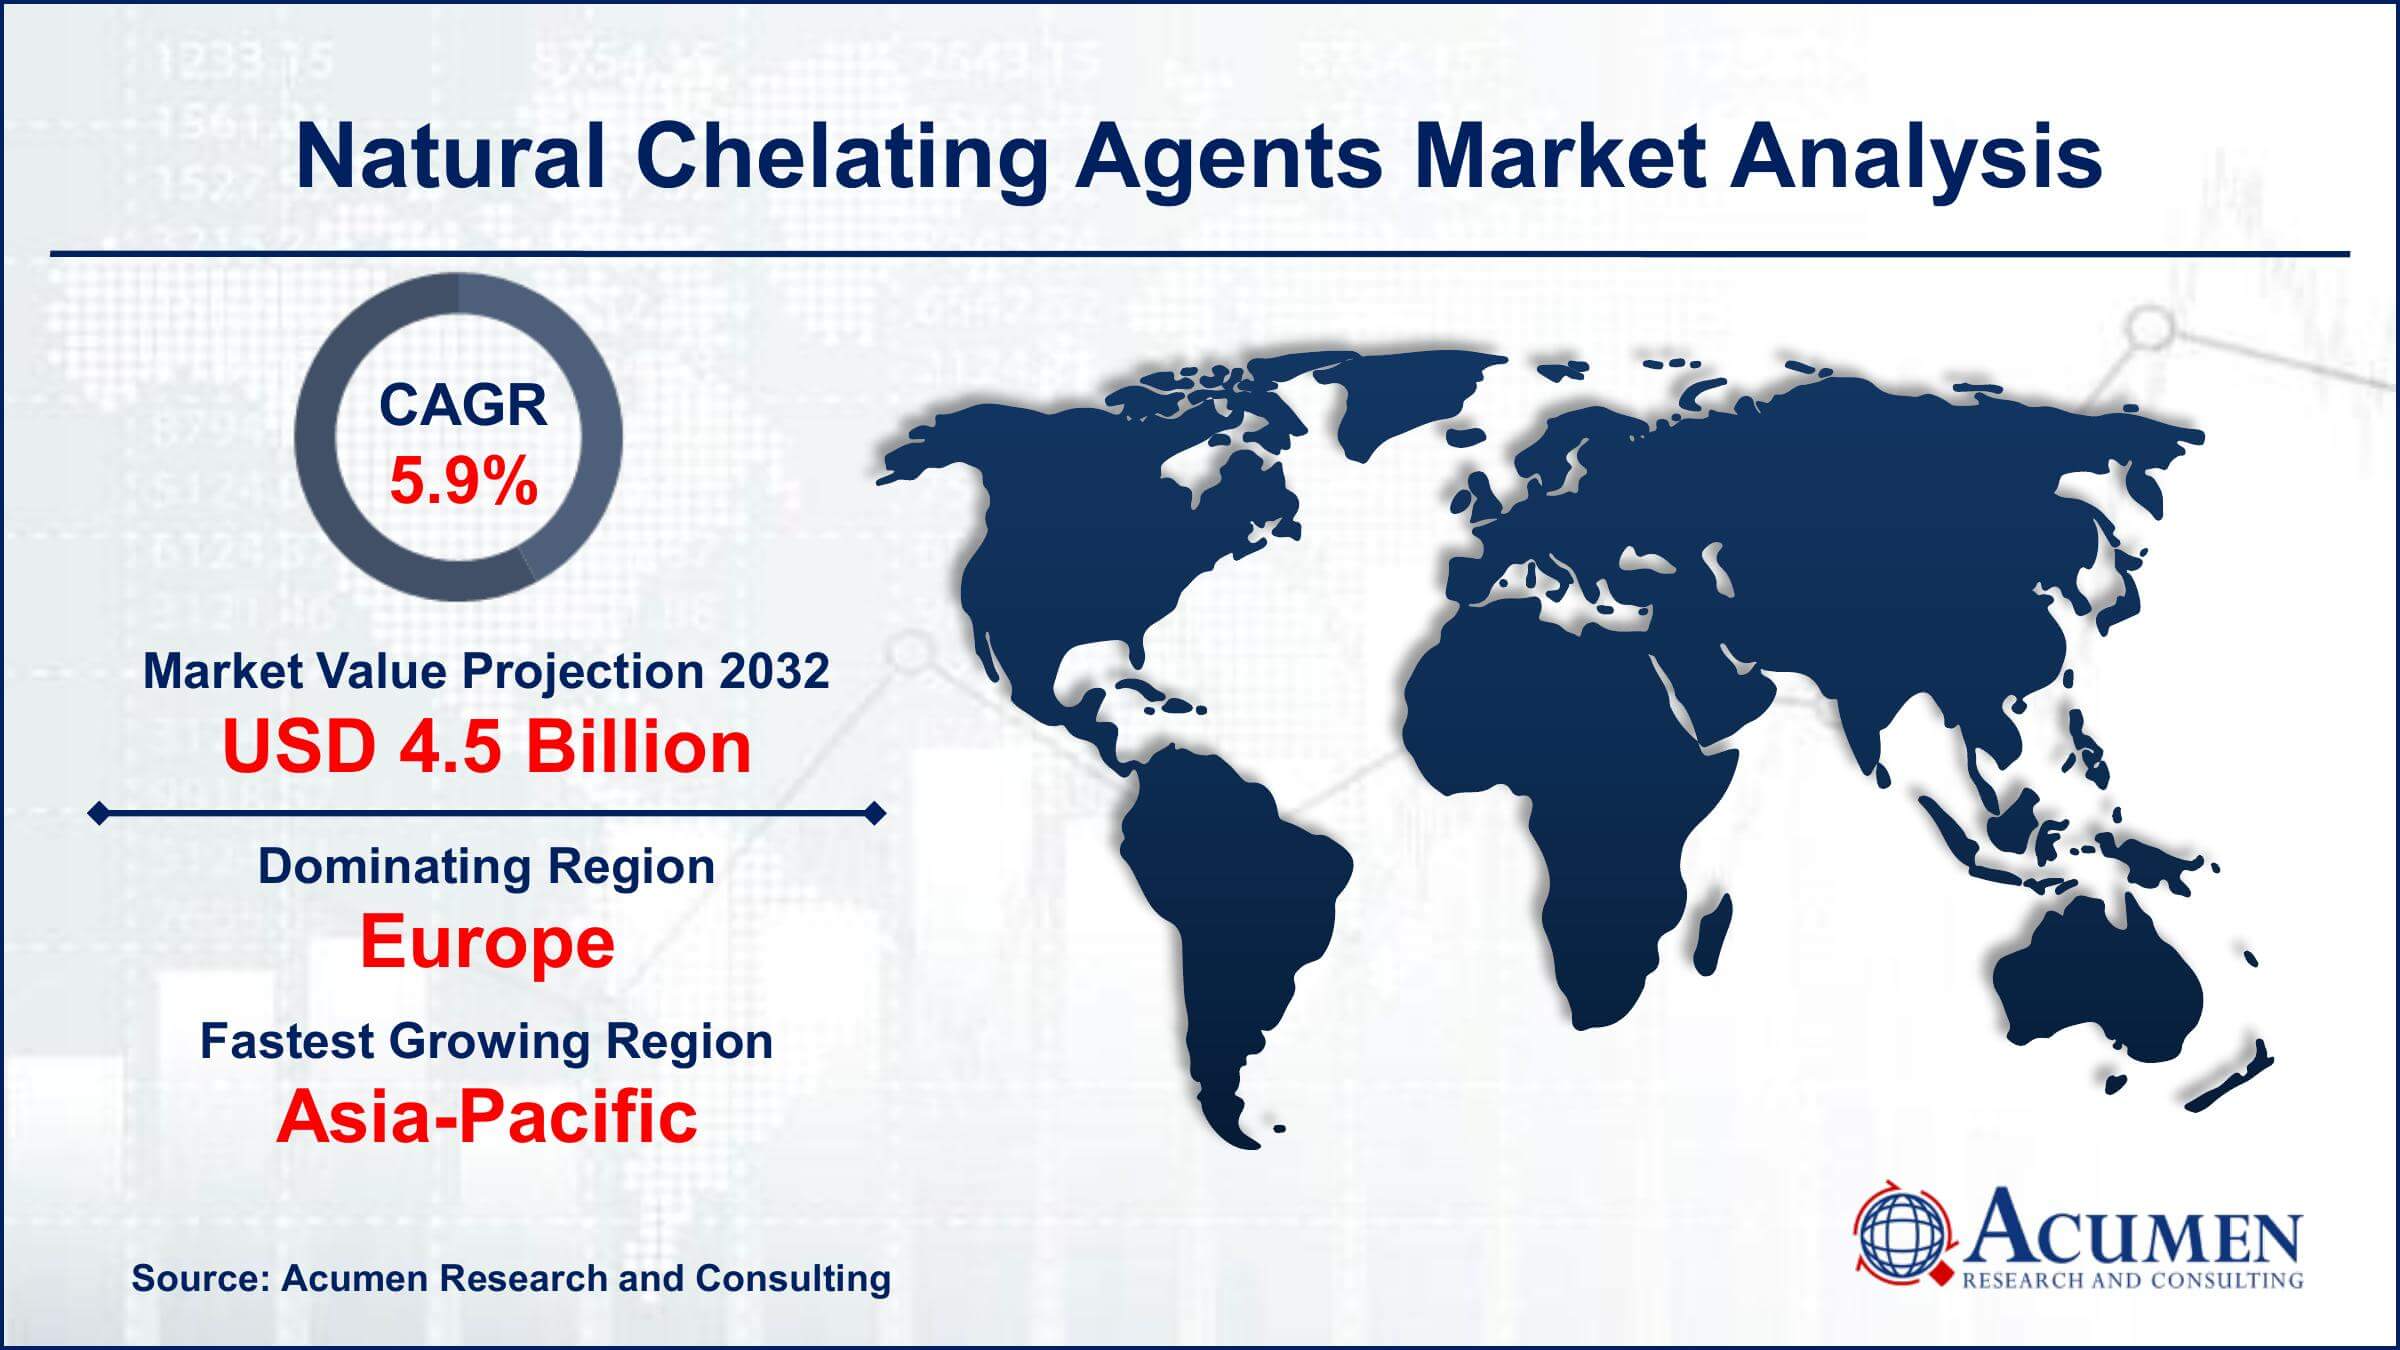 Global Natural Chelating Agents Market Trends